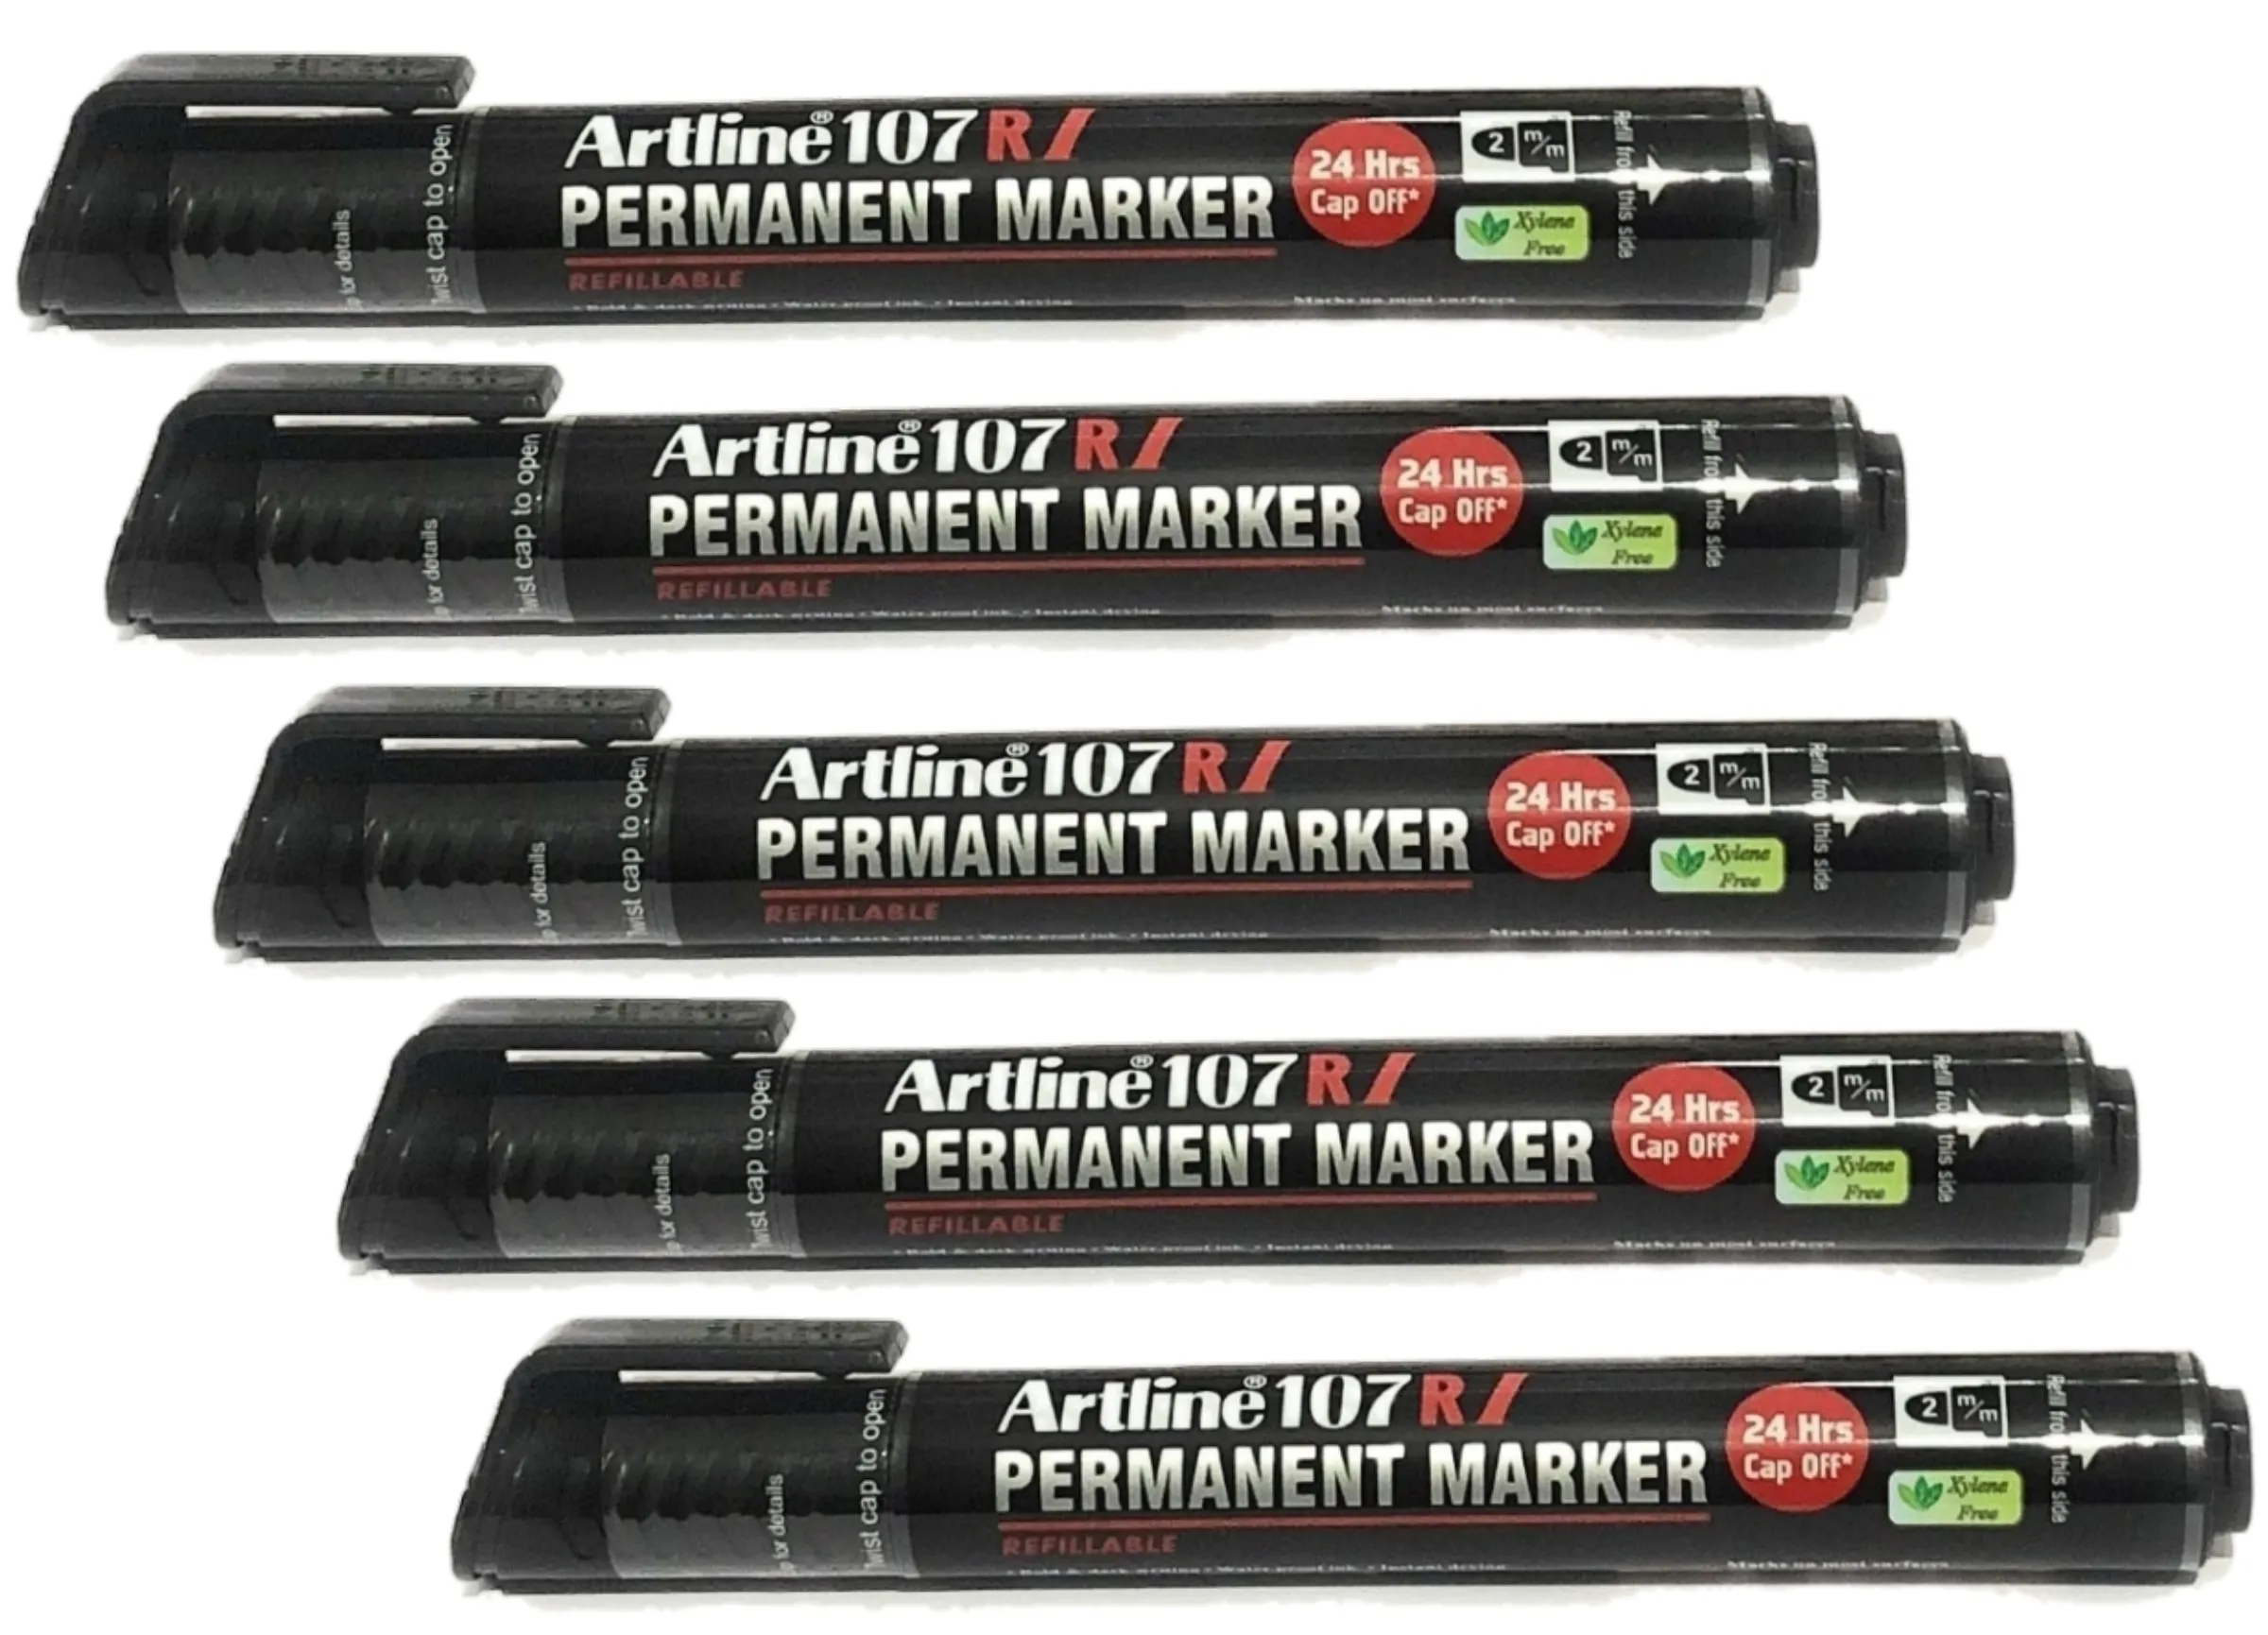 Artline Permanent Marker 107 RI Black Refillable Pack of 5 Marker